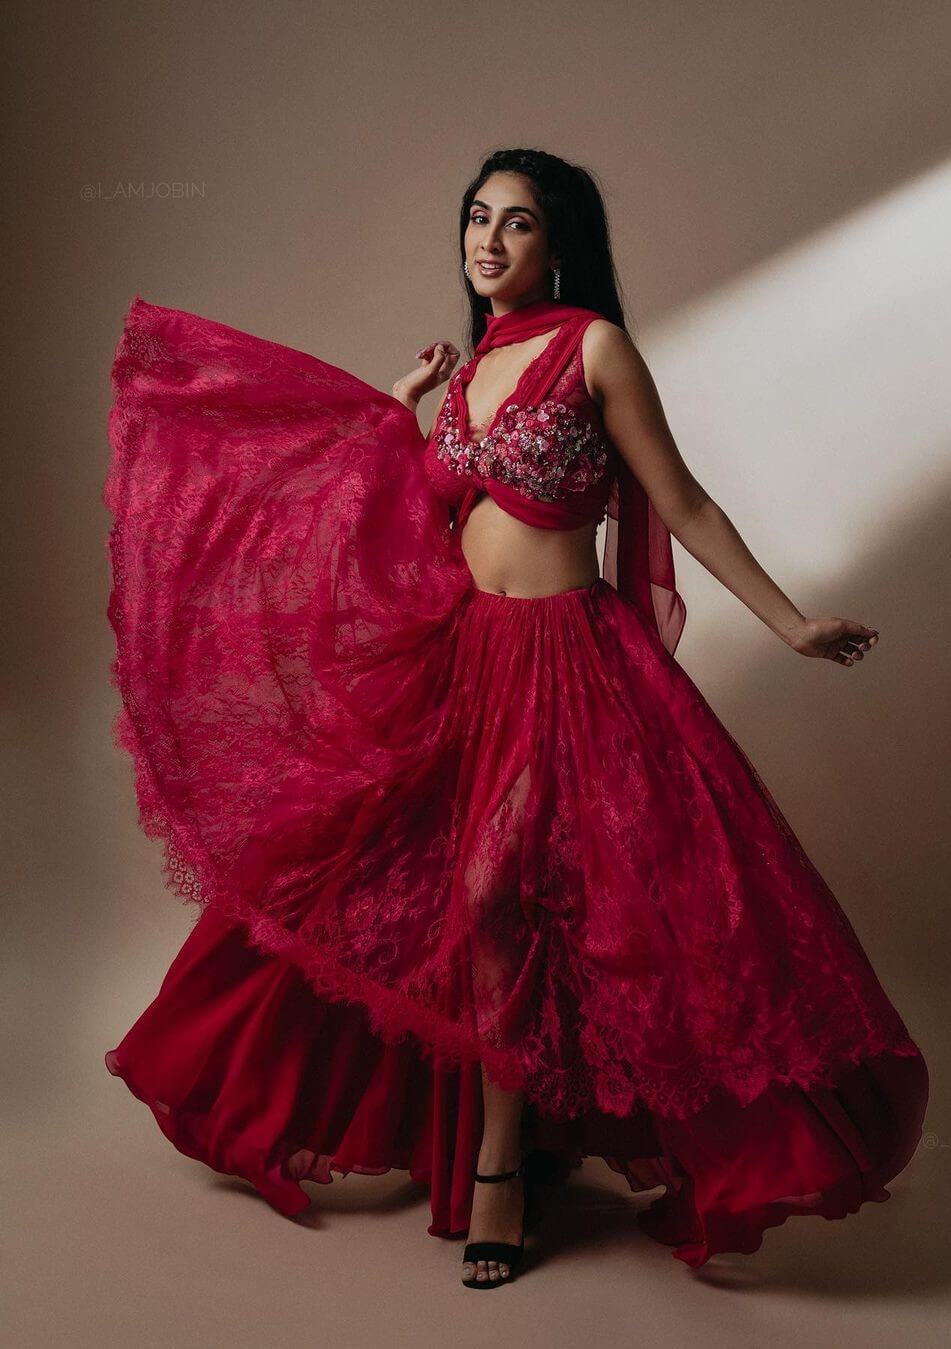 Fuchsia Pink Perfection: Inspiration for a Bridesmaid Look - Deepti Sati